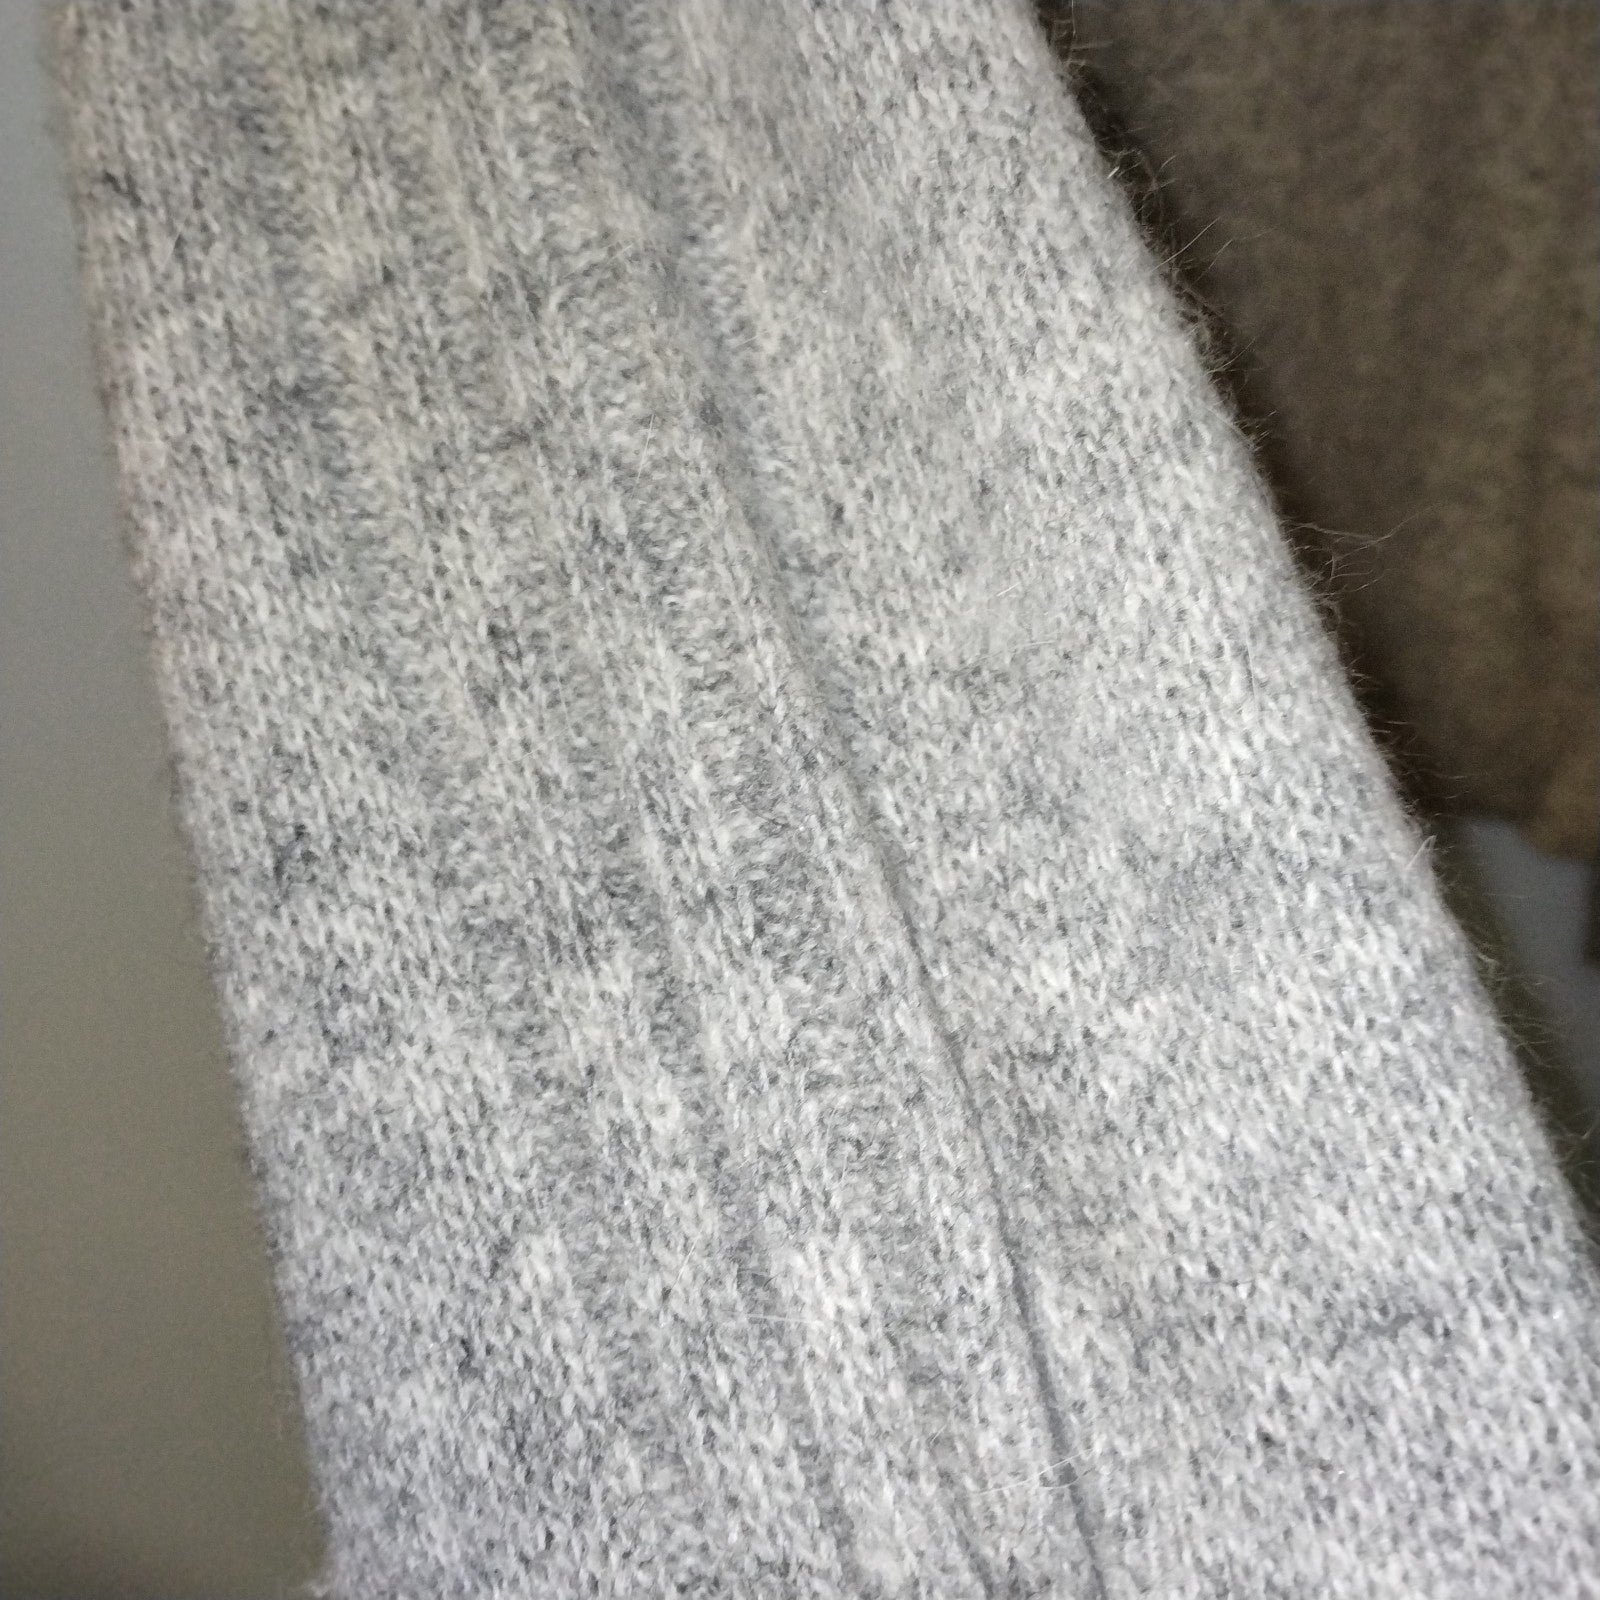 Perfect Ellen Tracy Vintage Sweater. Light Gray Boat Neck Princess Sleeves Delicate Knit OL0wQbPZh Zero Profit 